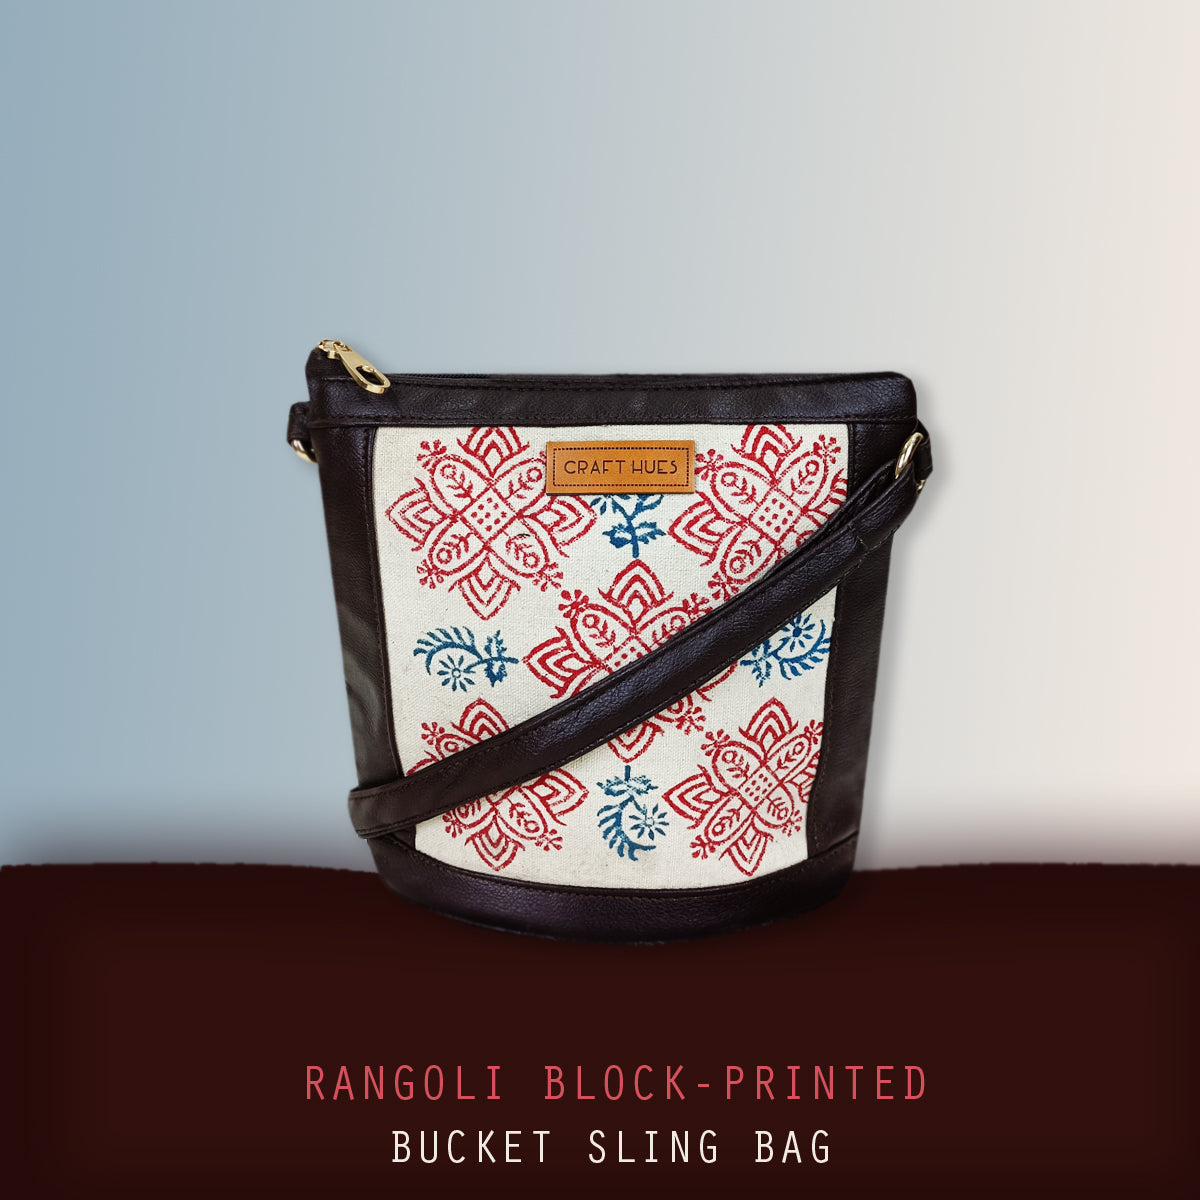 Rangoli Block-Printed Bucket Sling Bag